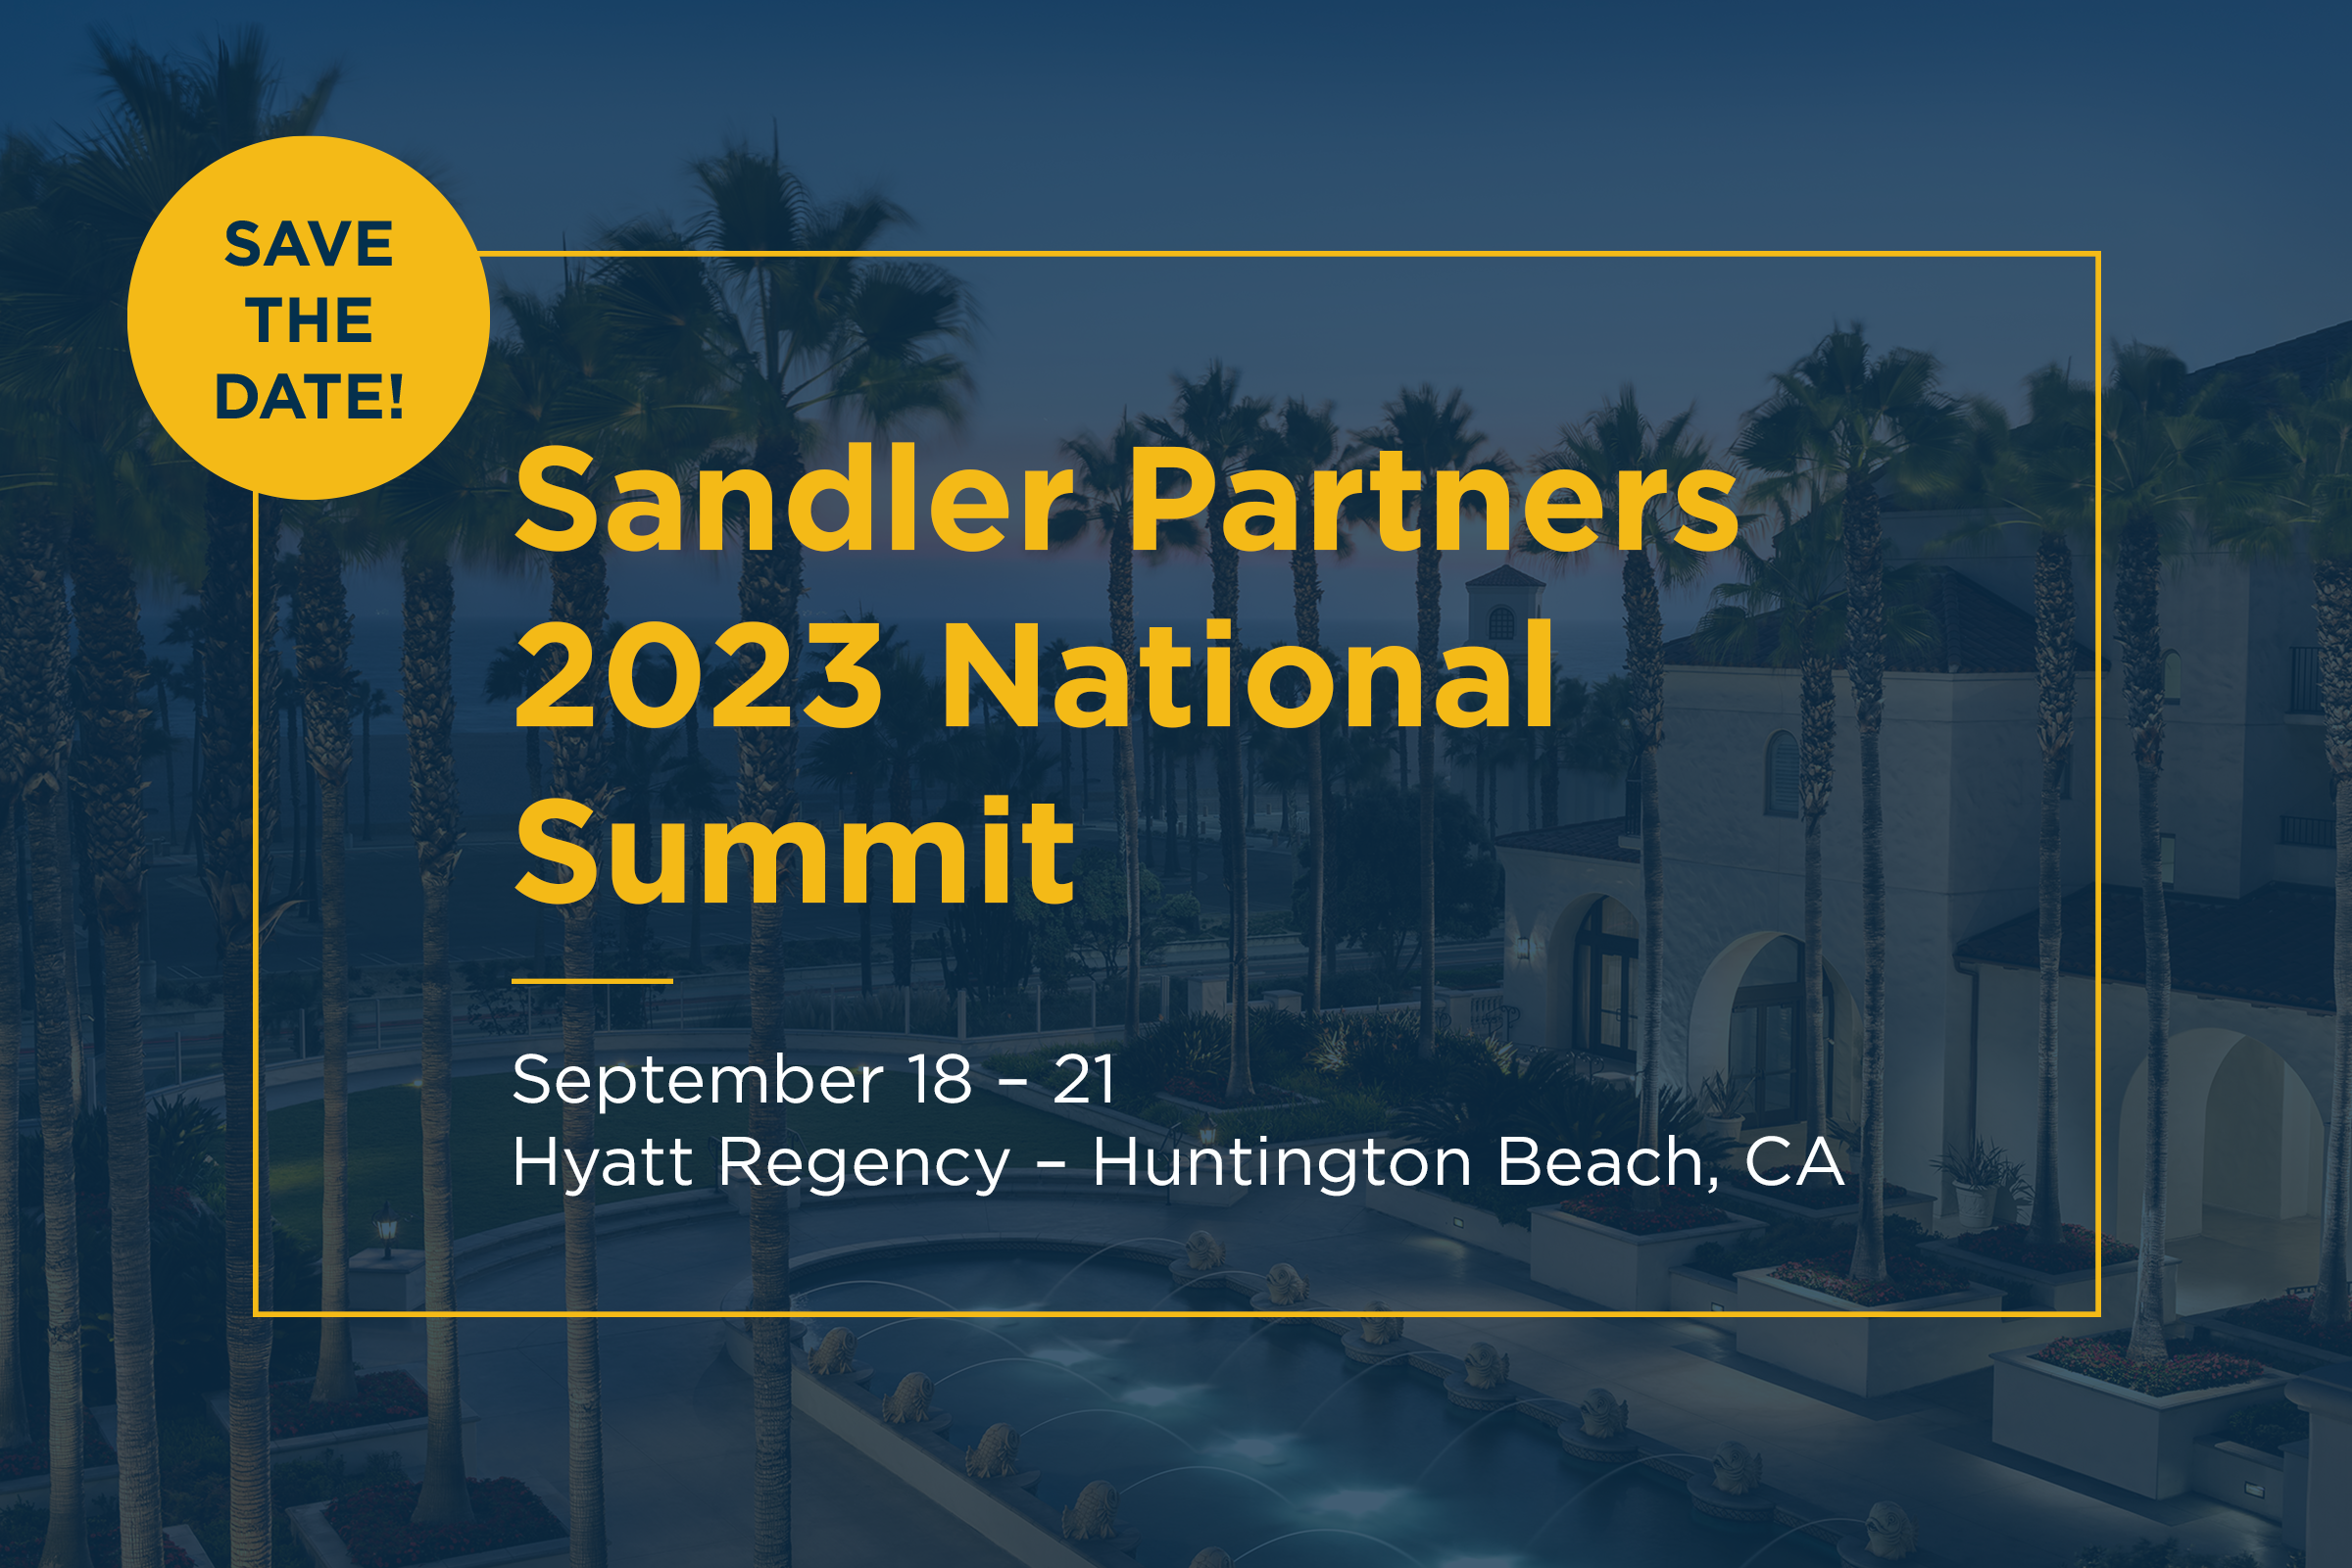 Sandler Partners 2023 Save the Date: September 18 - 21